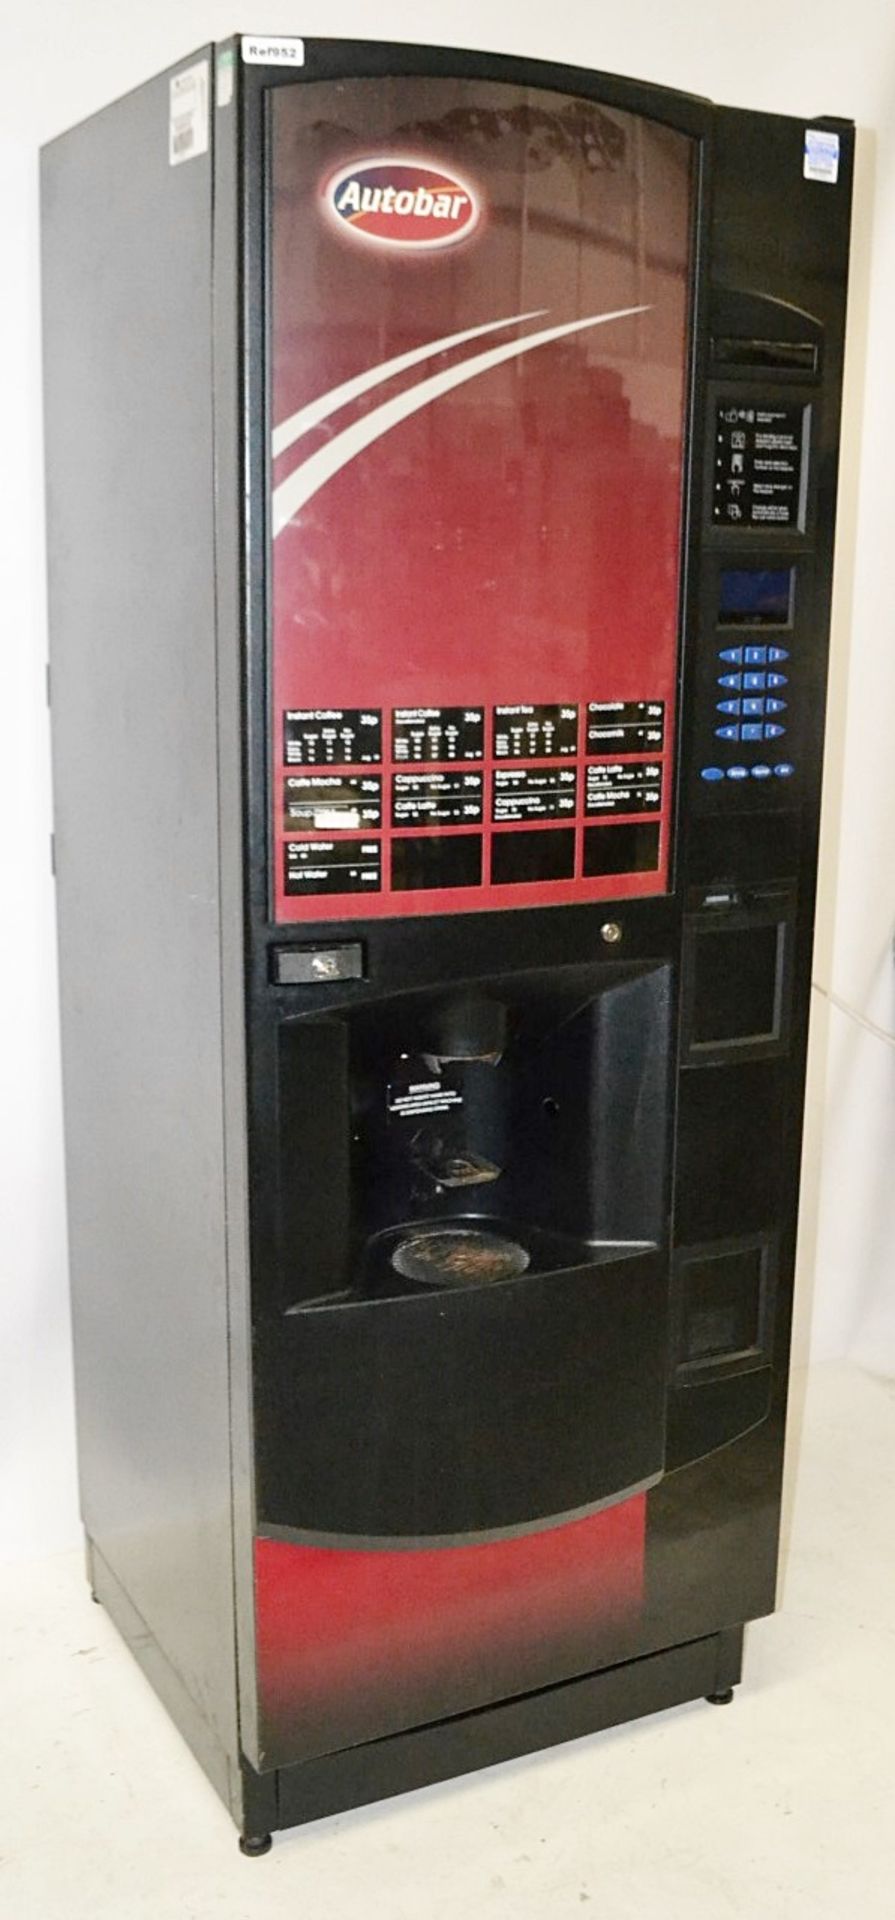 1 x Crane "Evolution" Hot Beverage Drinks Vending Machine - Year: 2009